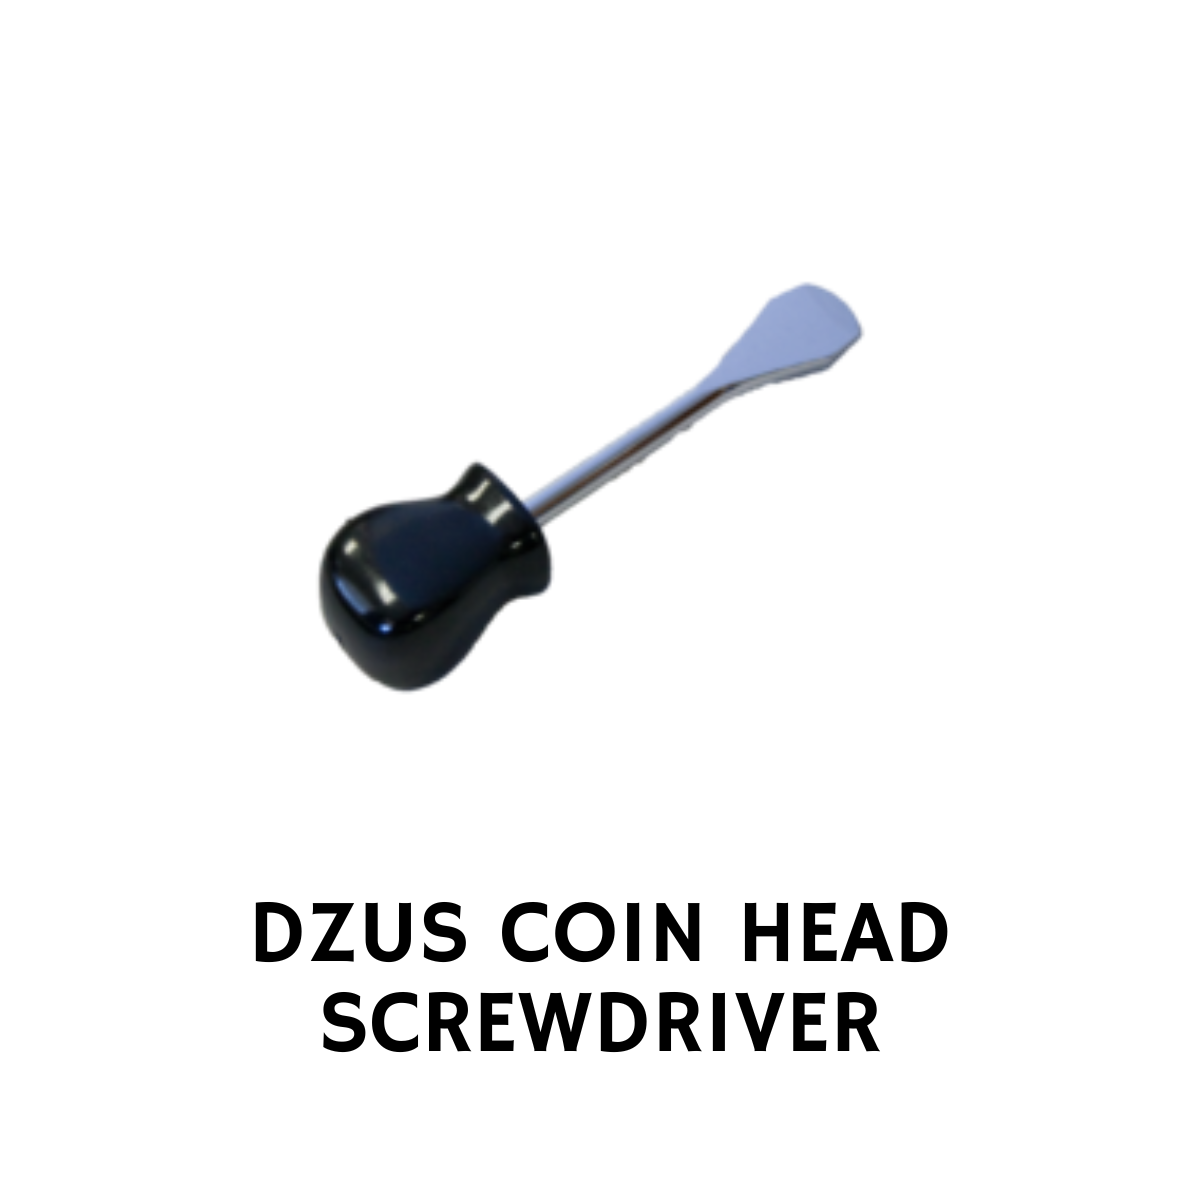 DZUS COIN HEAD SCREWDRIVER